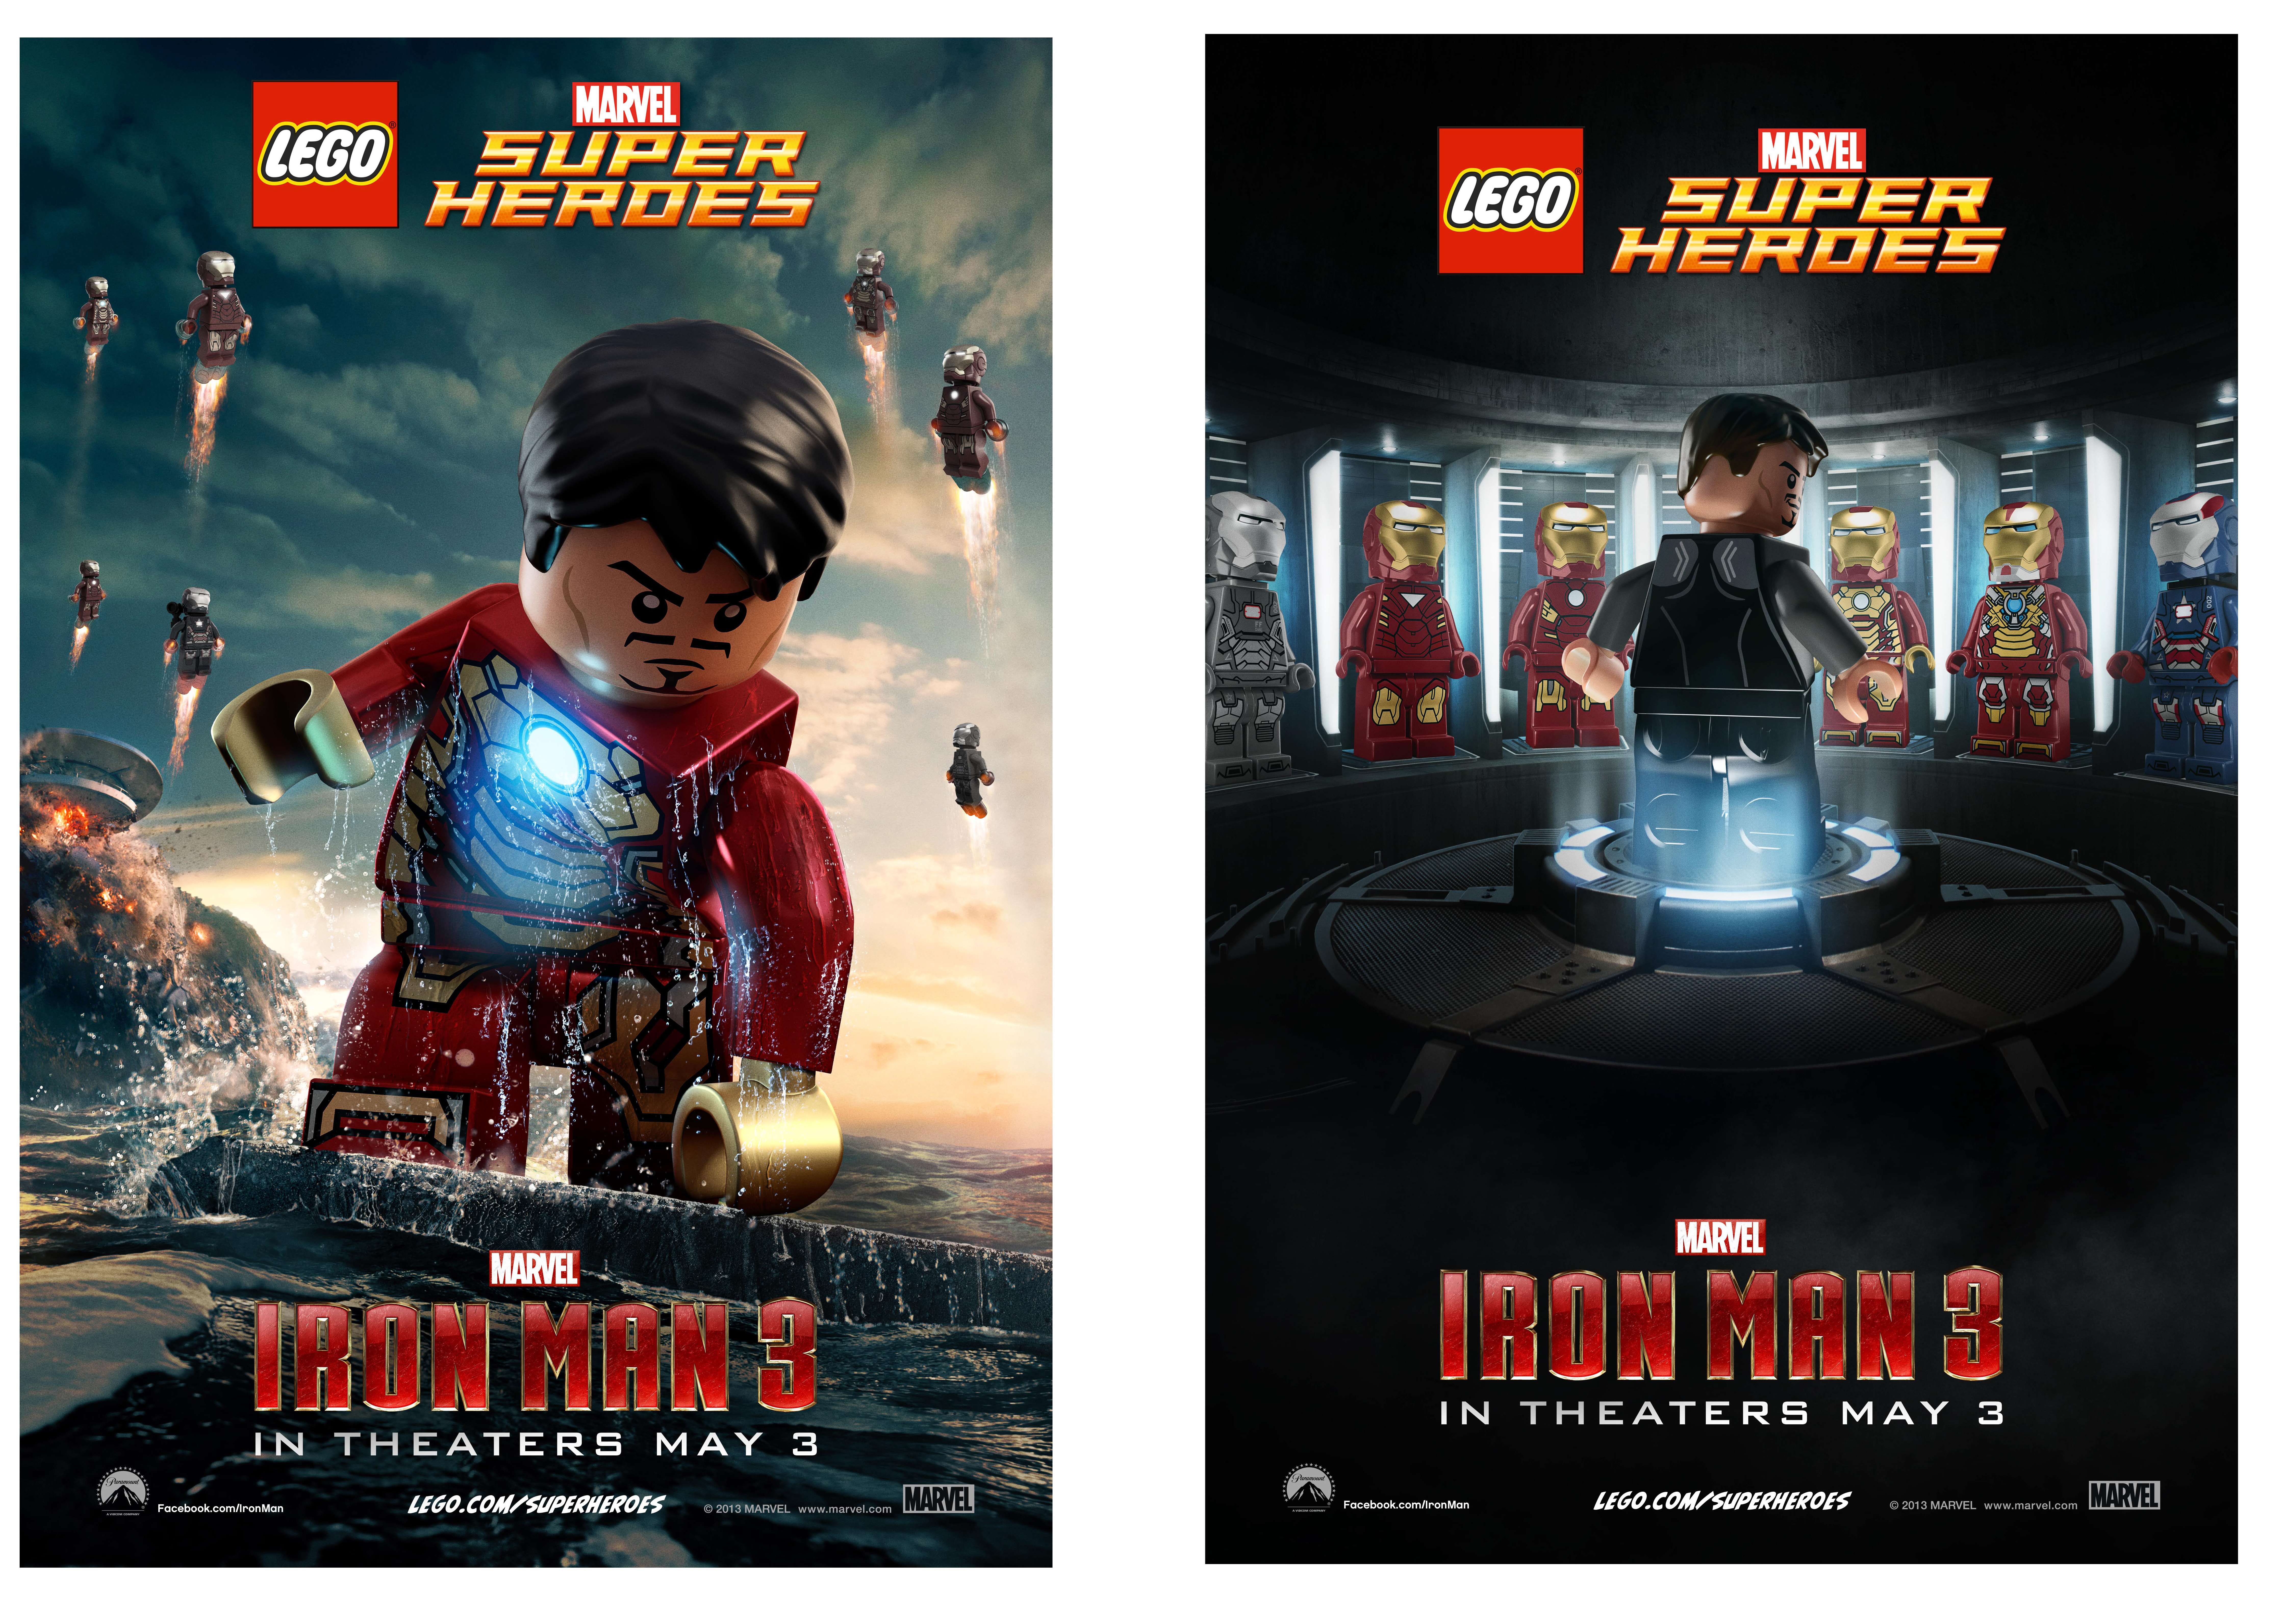 Marvel’s Iron Man 3 meets LEGO! #IronMan3